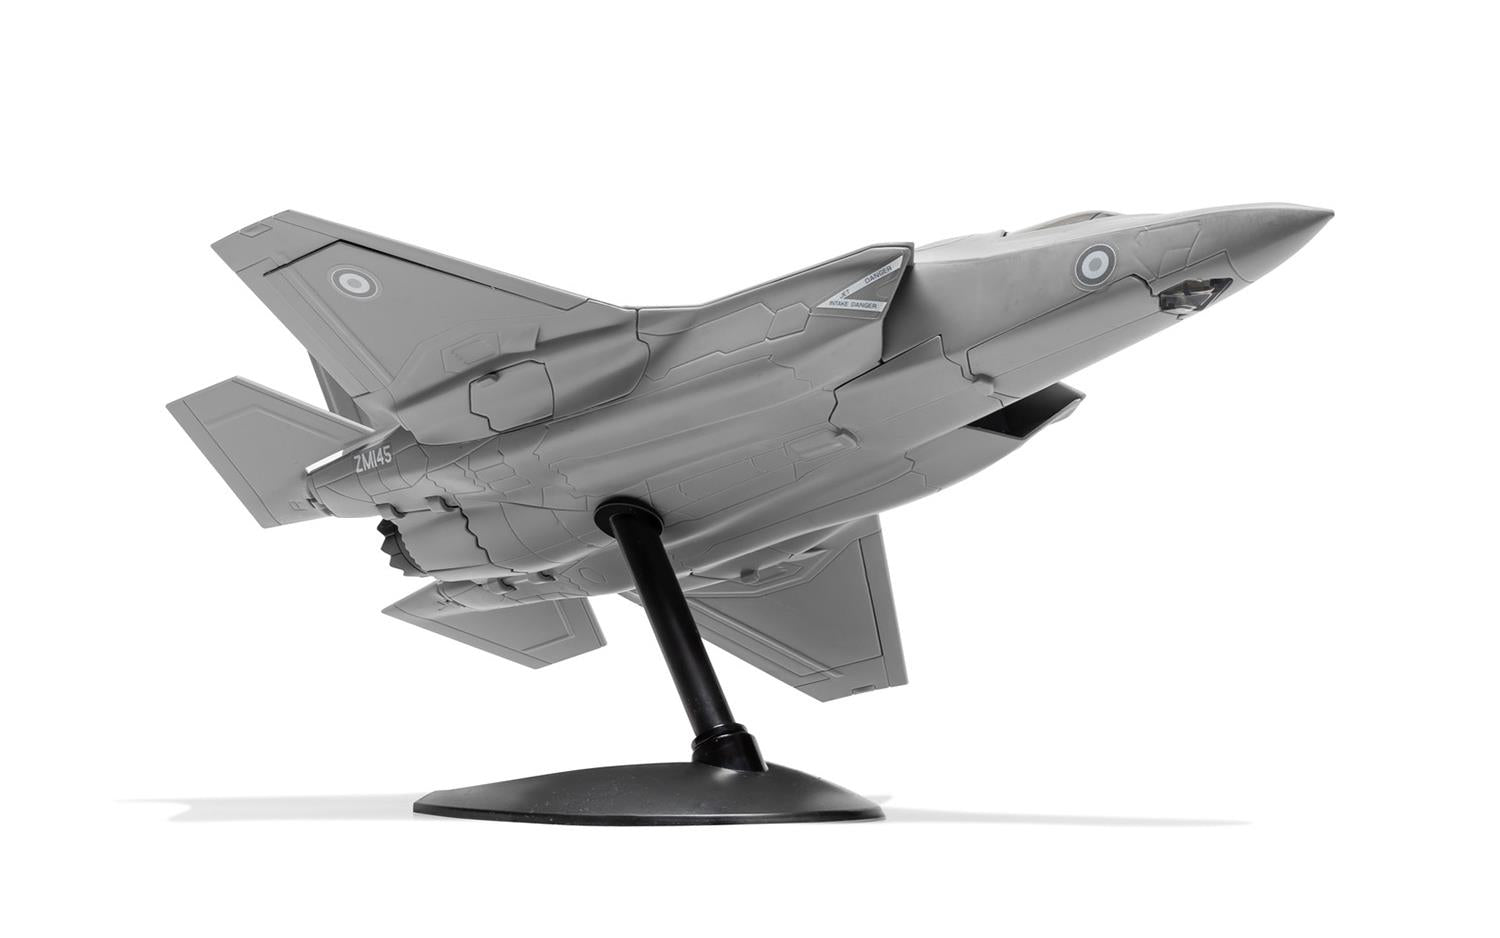 Airfix QUICKBUILD F-35B Lightning II (J6040)